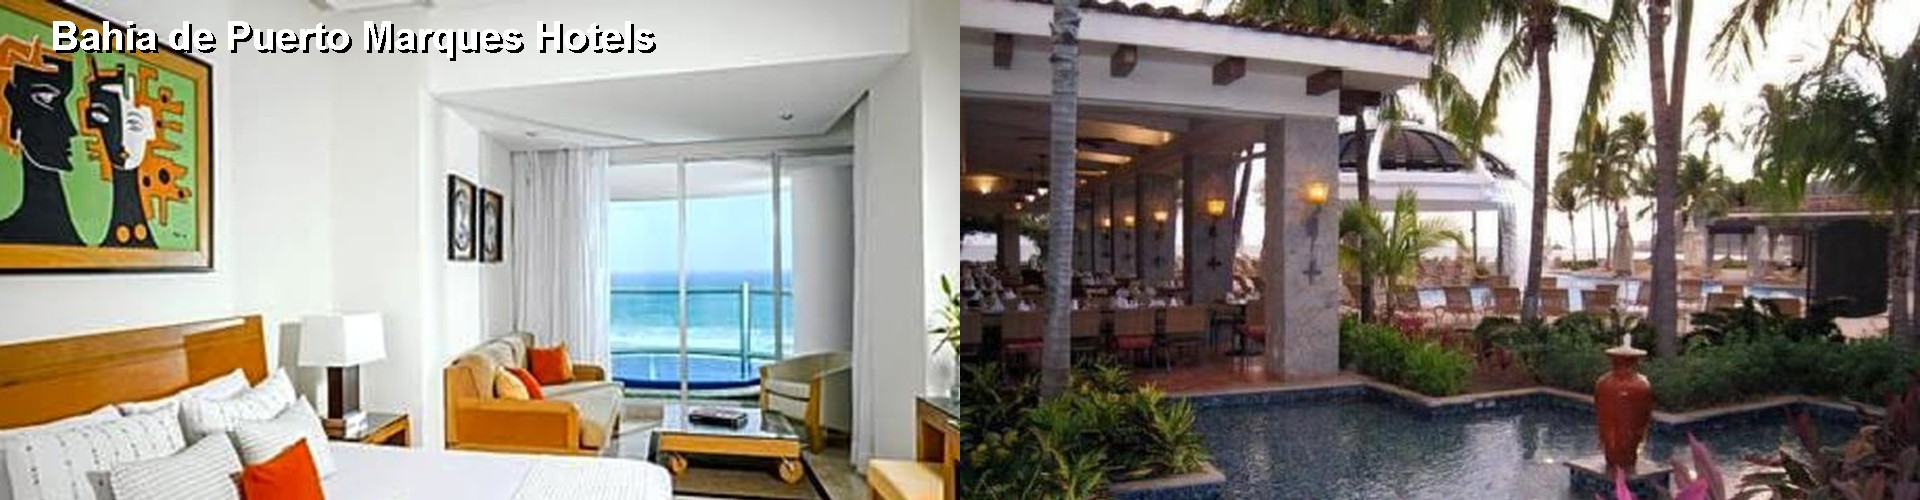 5 Best Hotels near Bahia de Puerto Marques